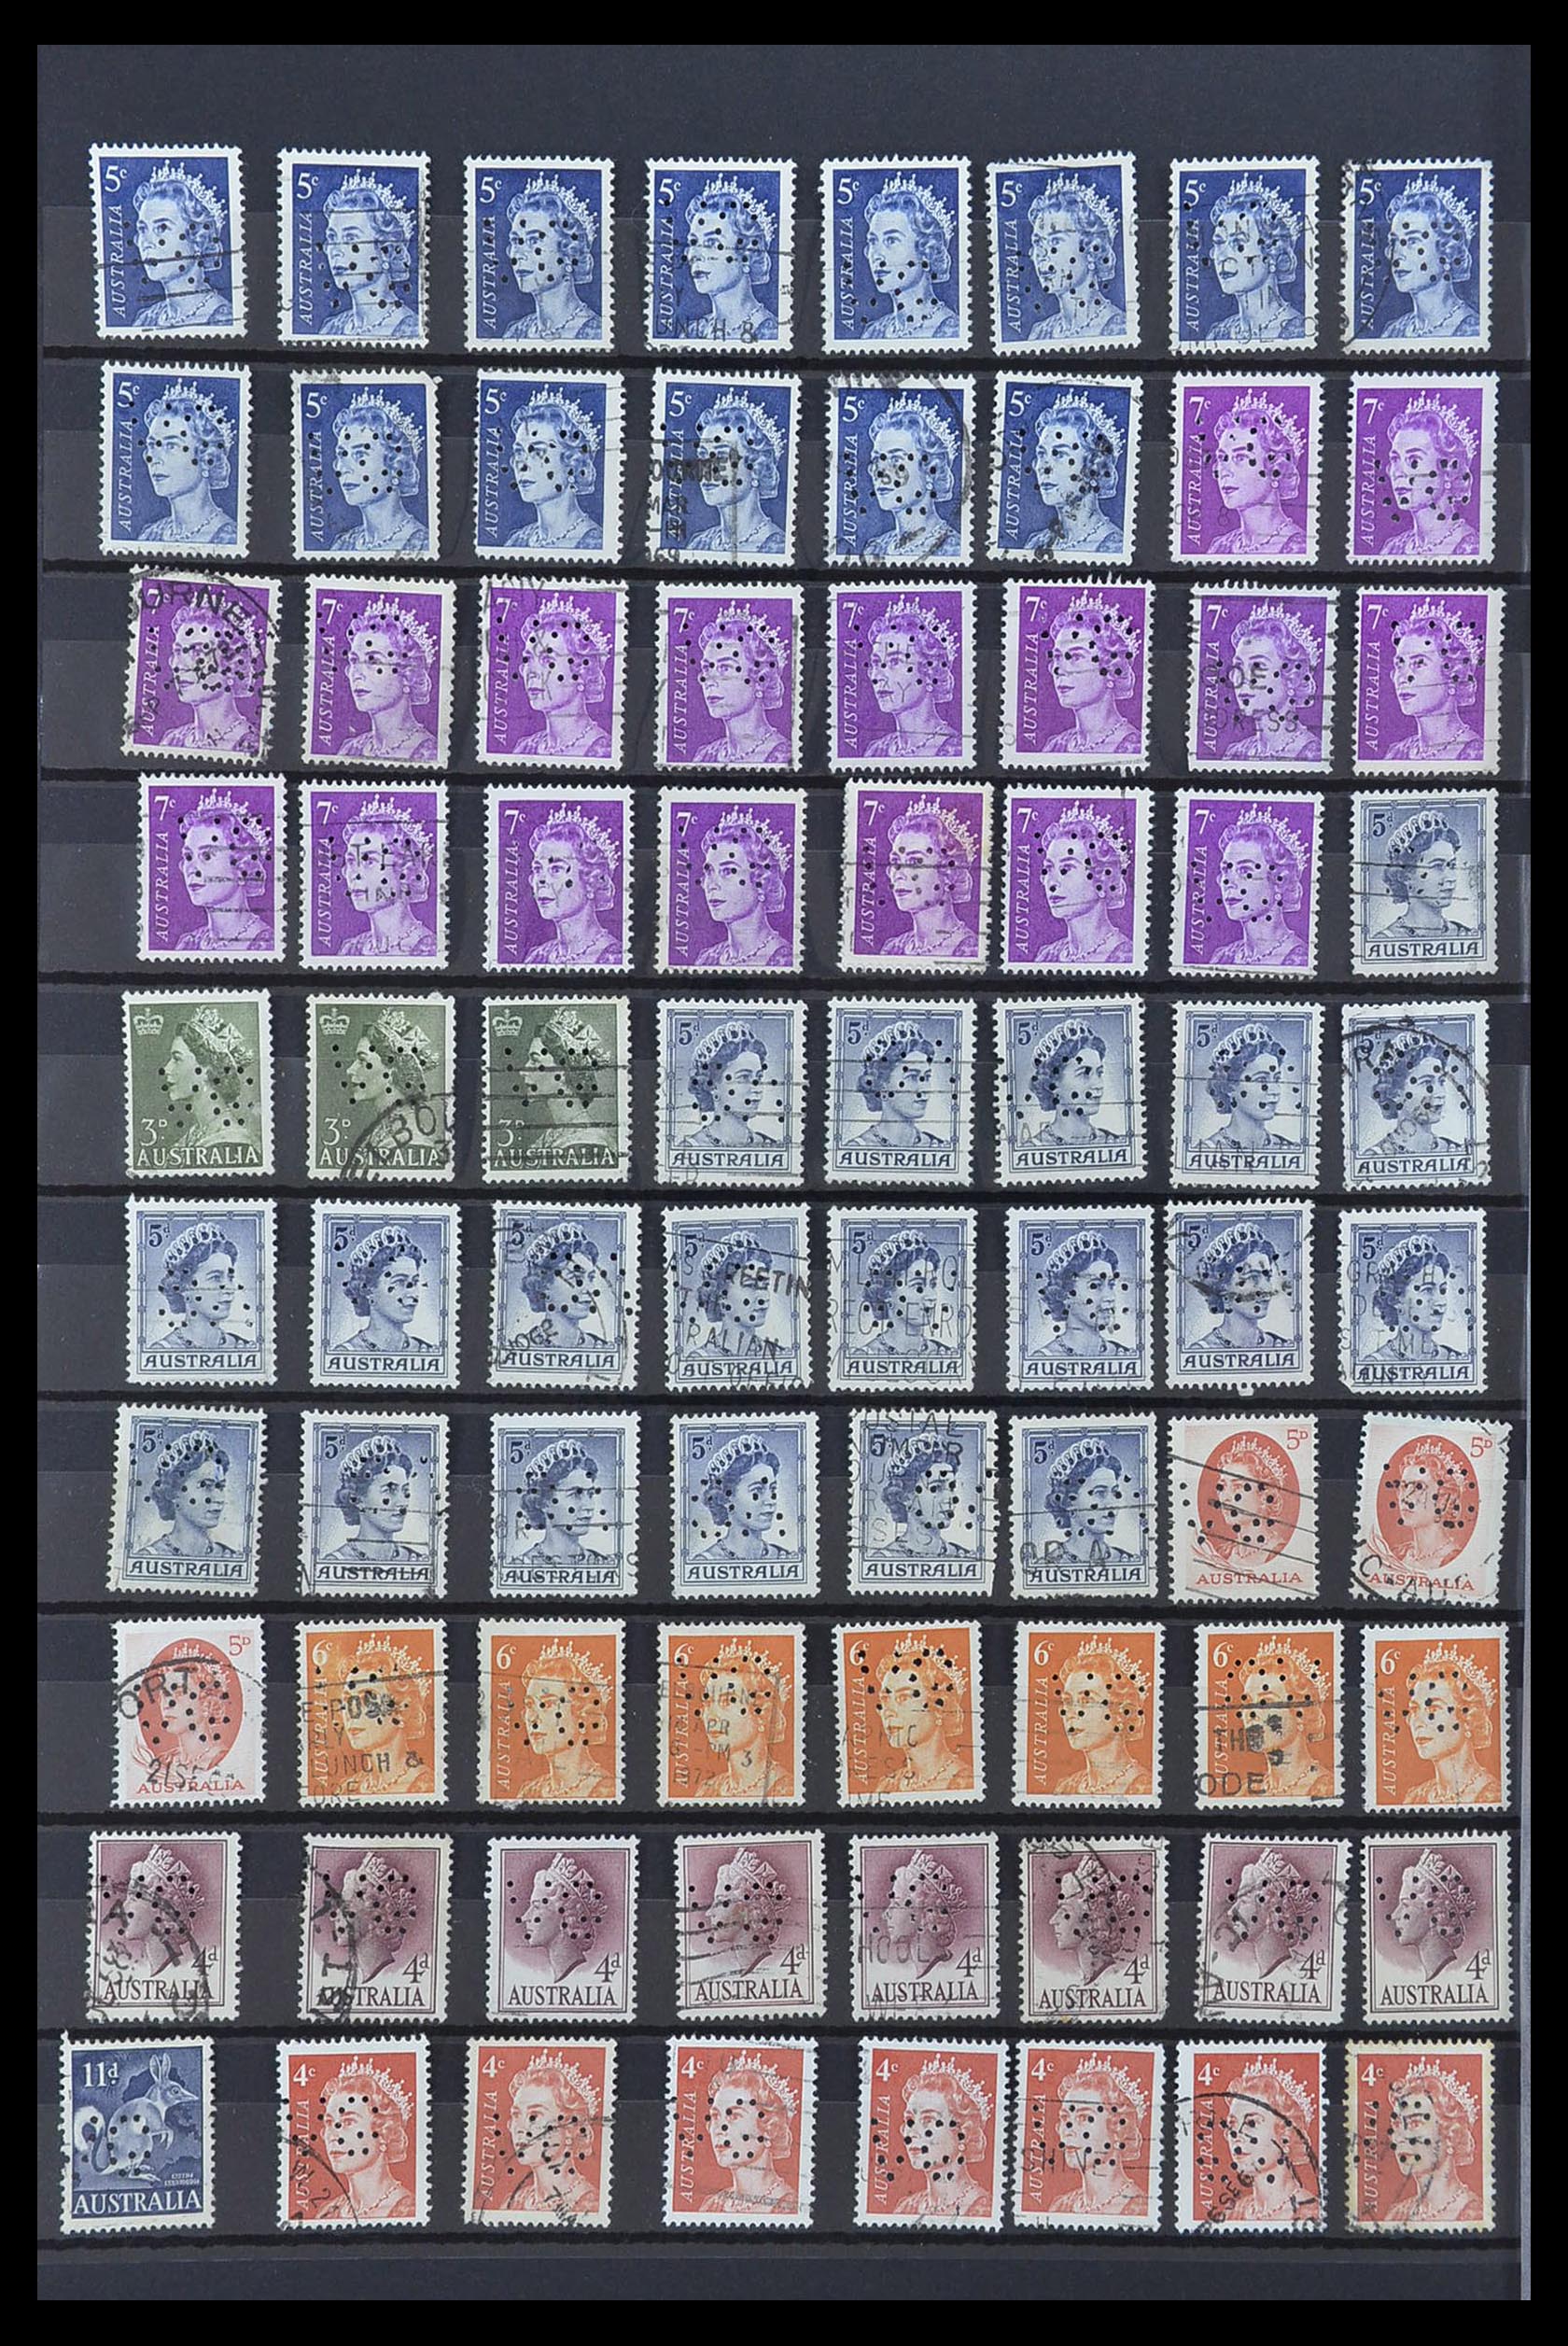 33510 004 - Stamp collection 33510 Australia perfins 1900-1970.